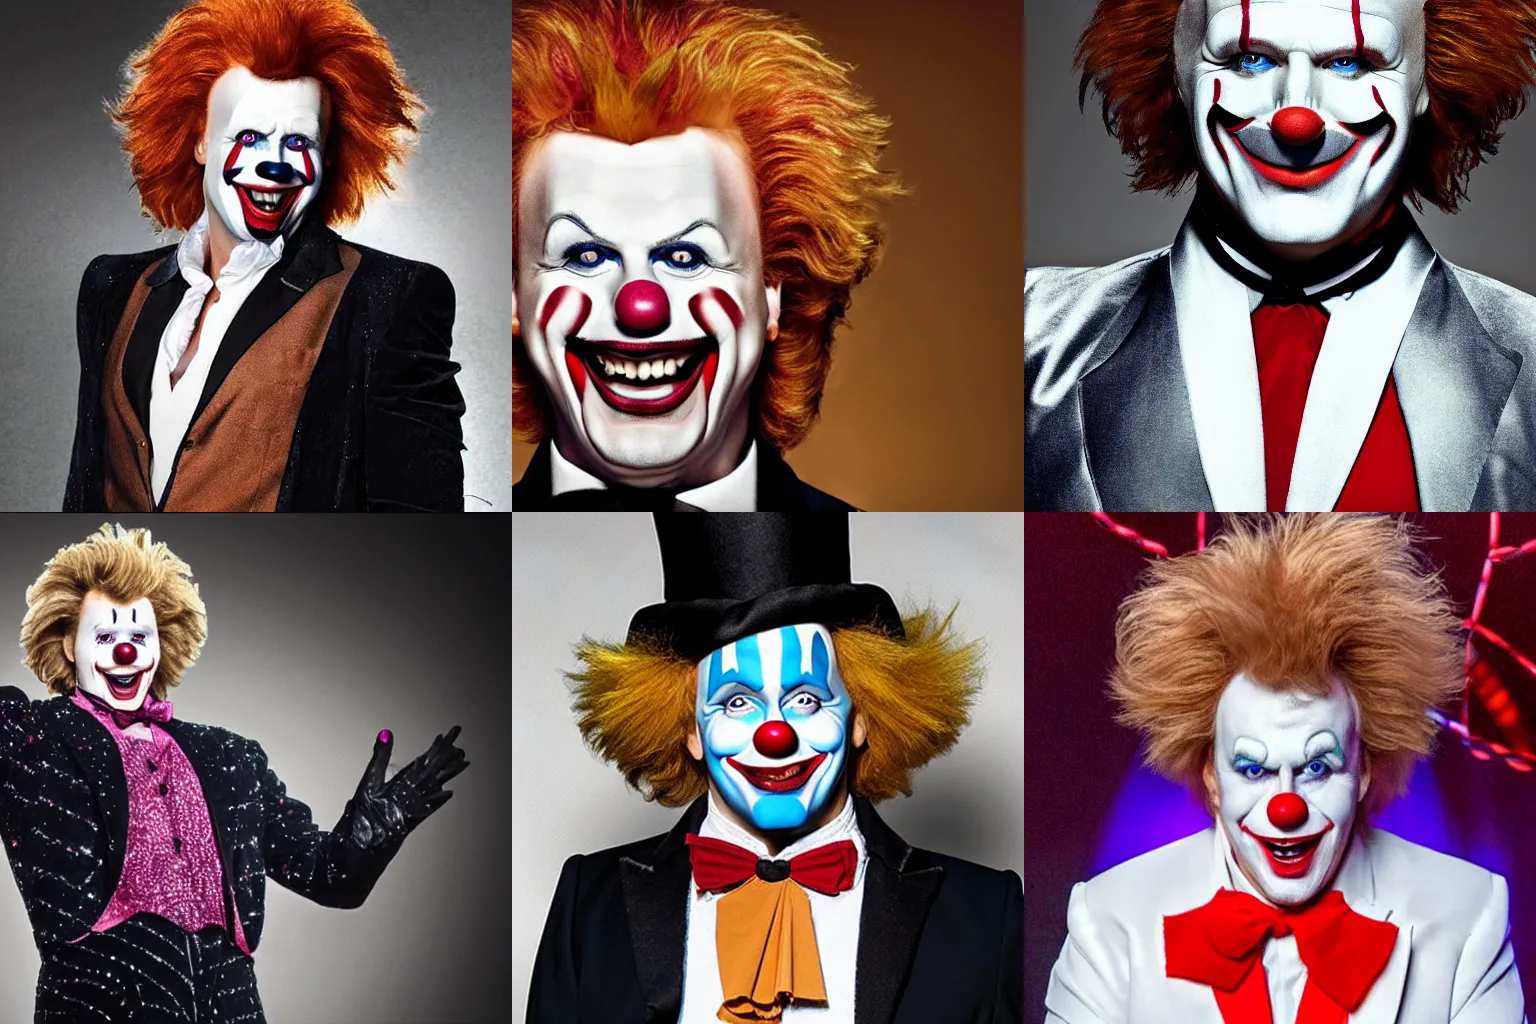 Prompt: Hans Klok as It the clown